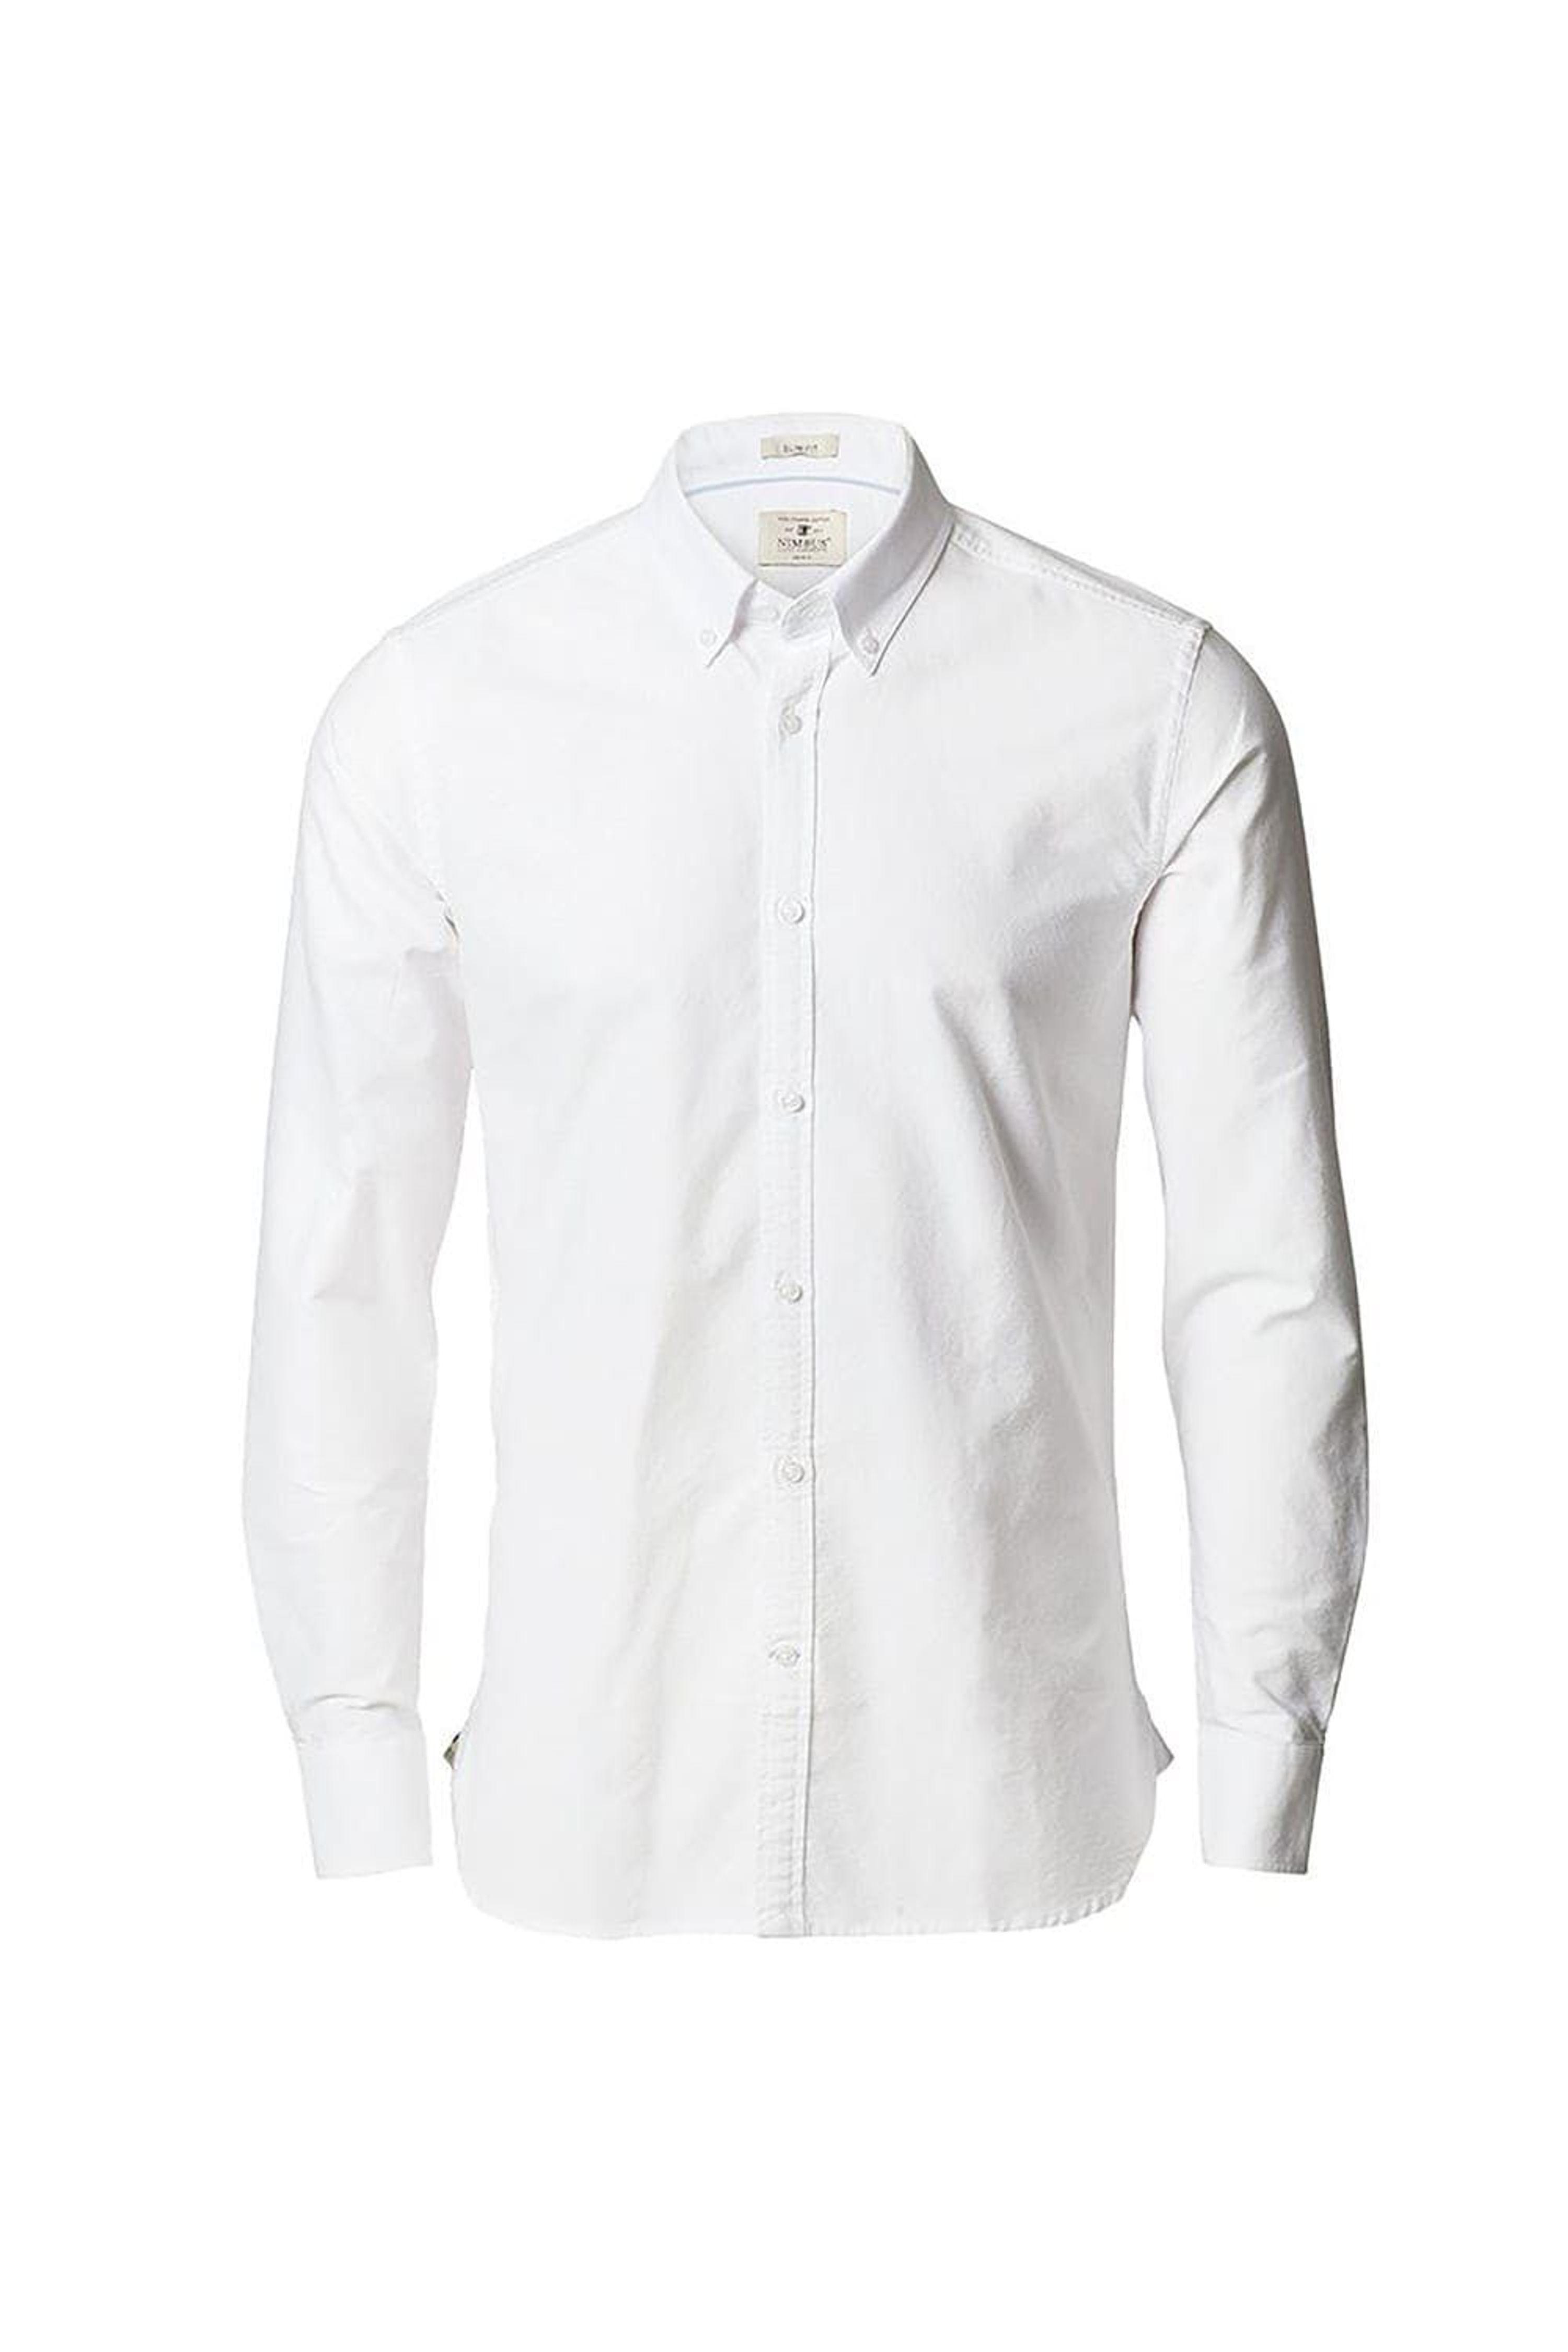 Nimbus Rochester Slim Fit Long Sleeve Oxford Shirt in White for Men | Lyst